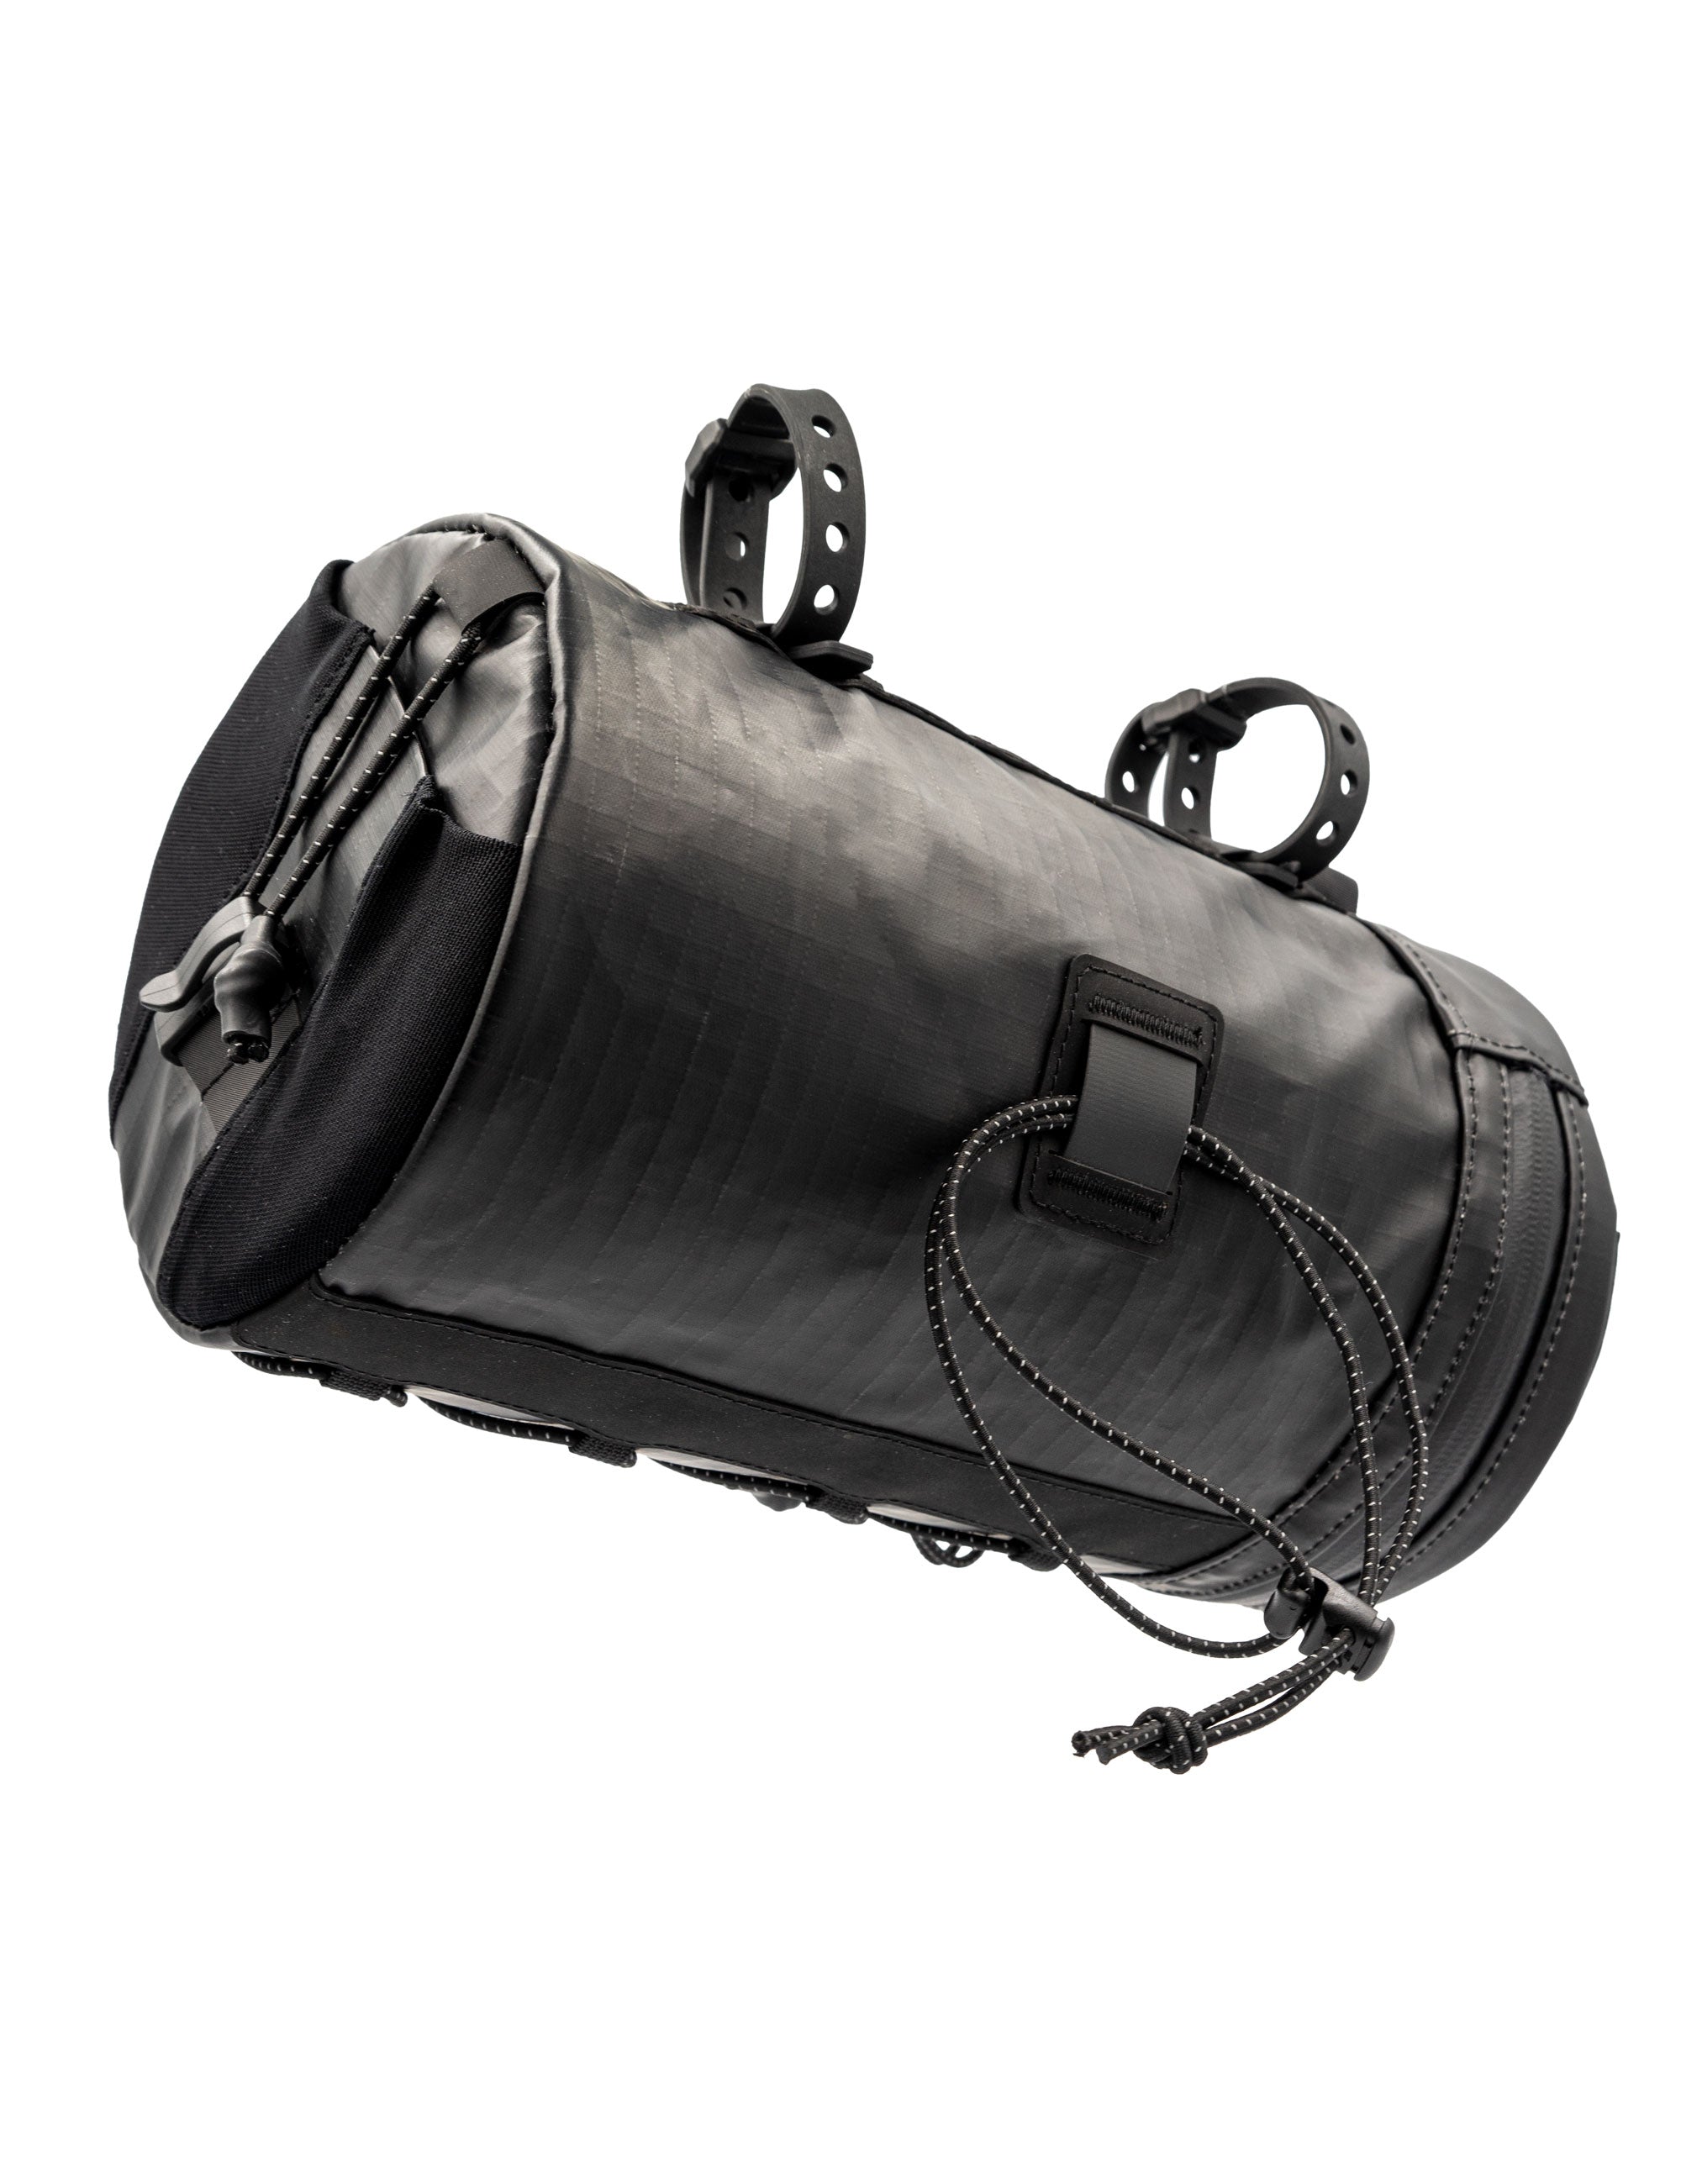 Smuggler HC Large Handlebar Bag Accessories  - Orucase